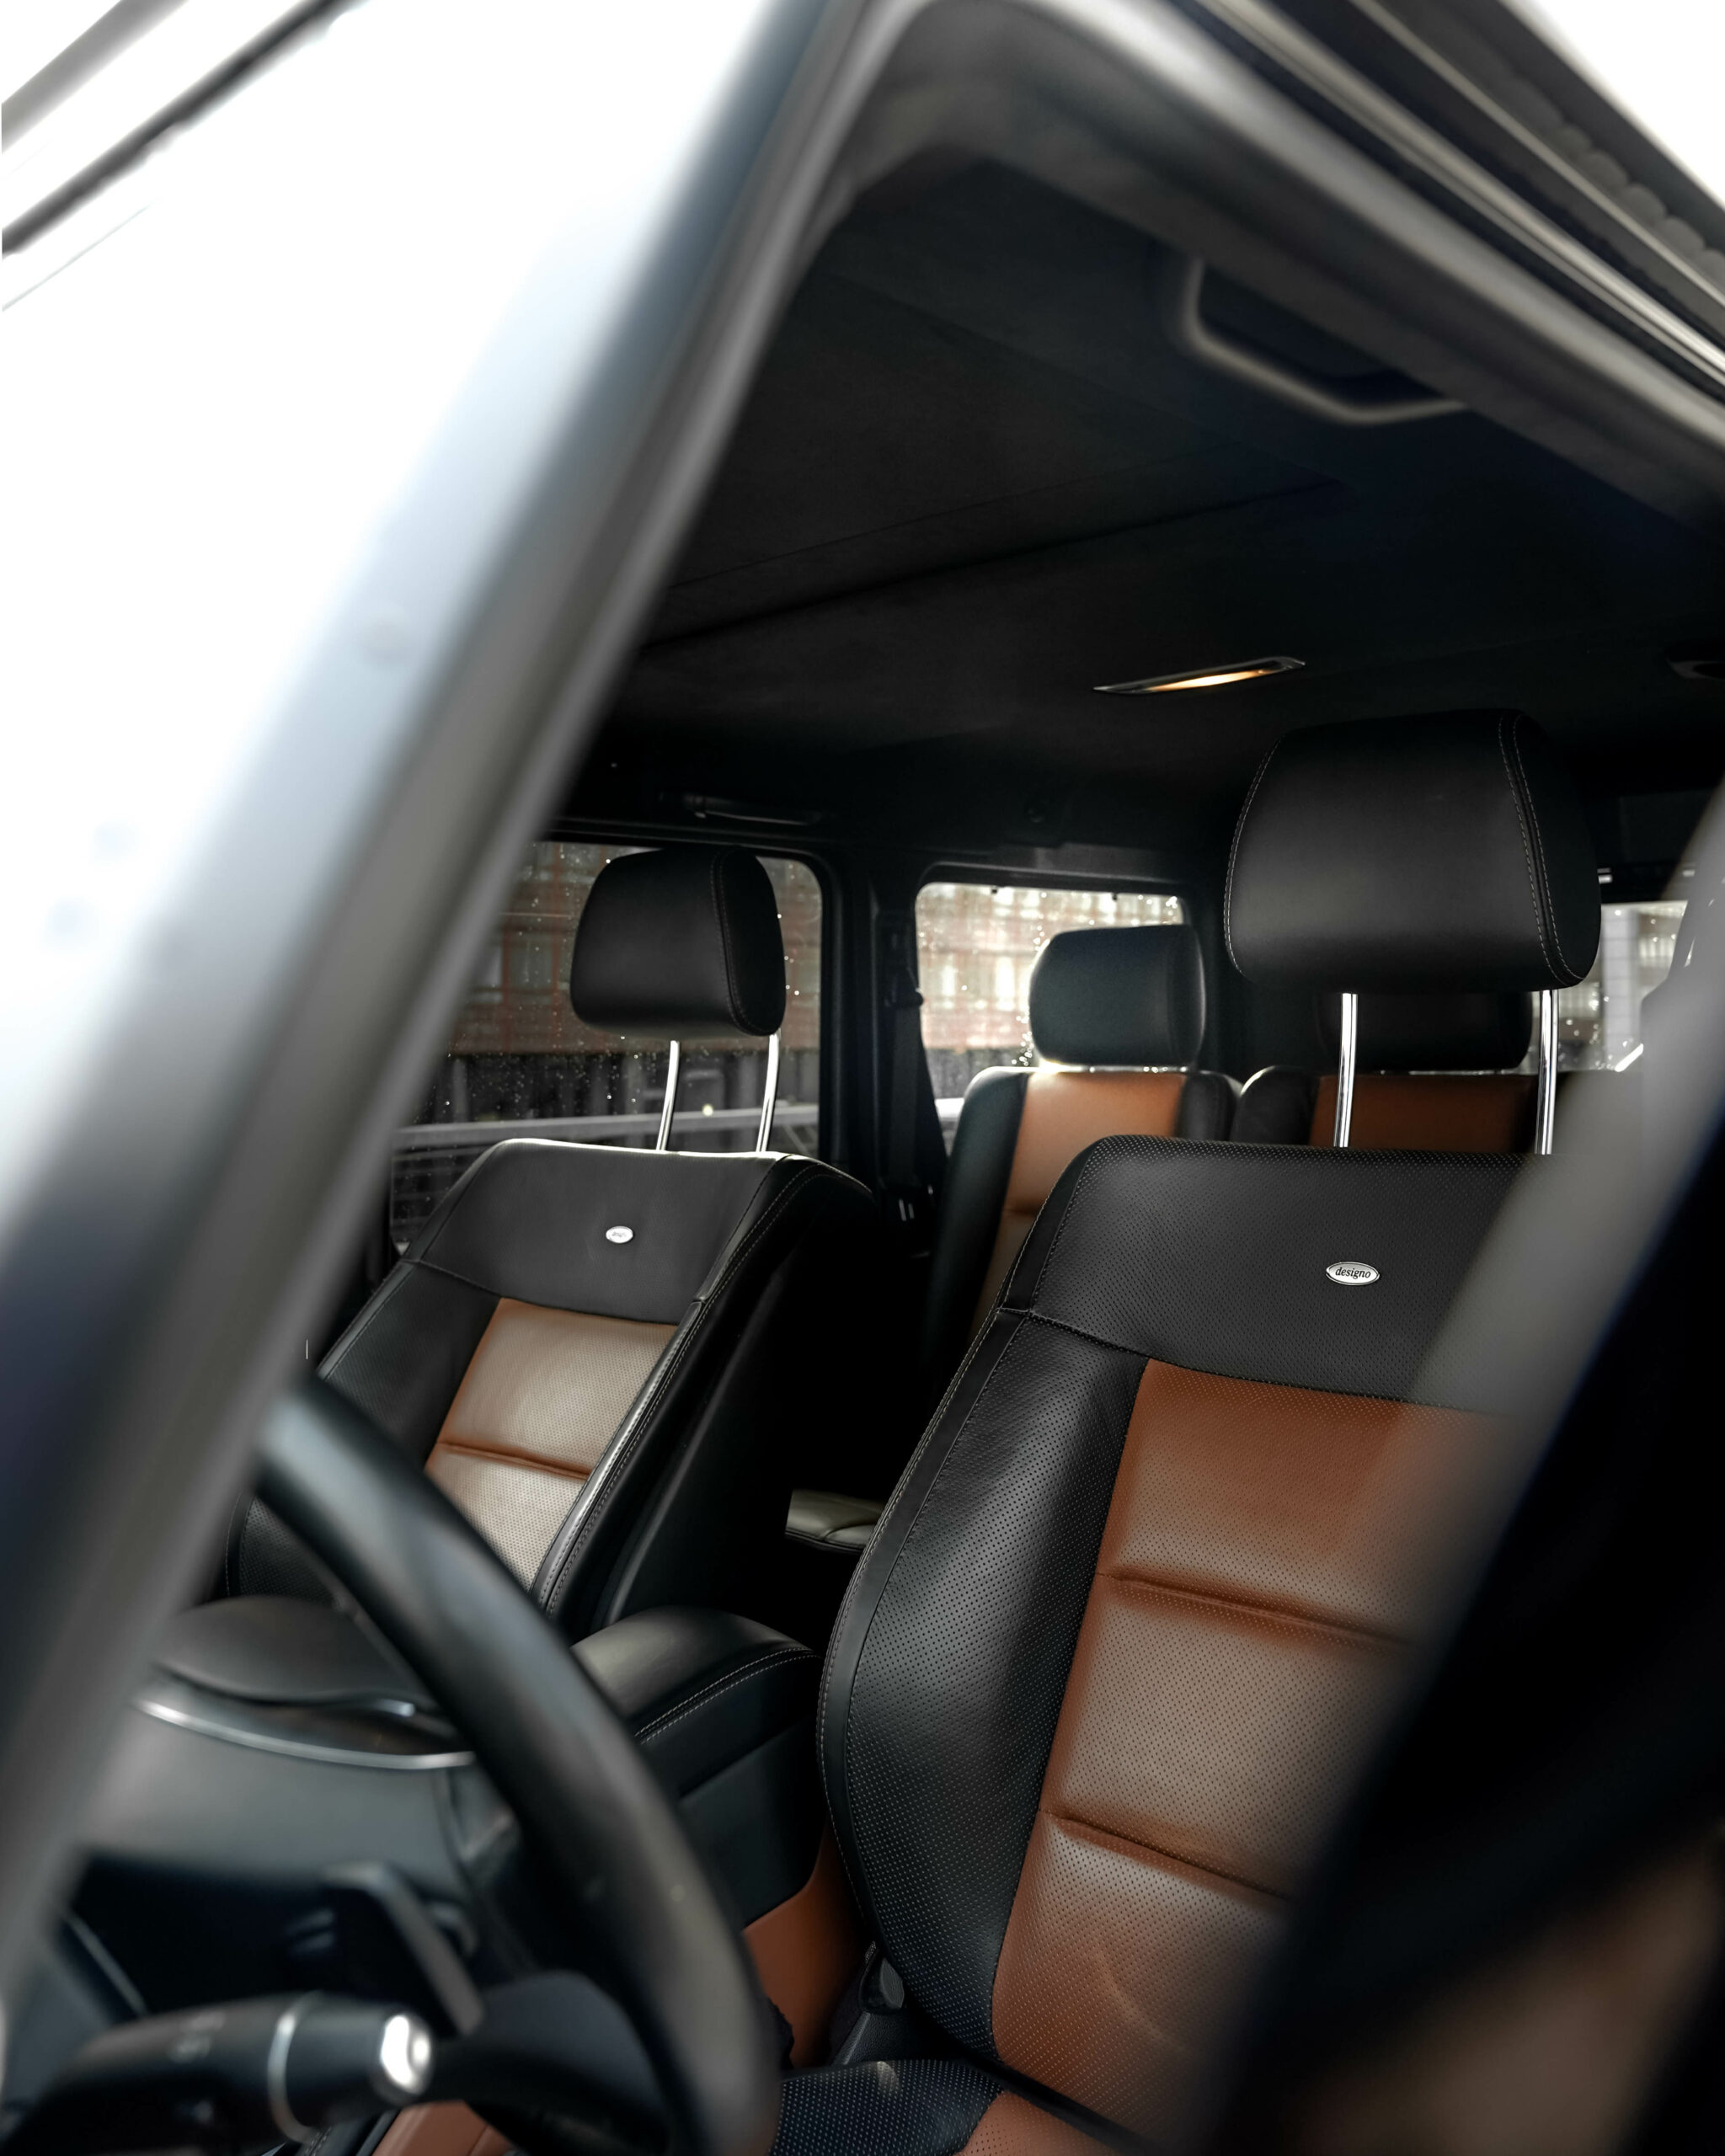 Mercedes G500 side view rent time ledersitze